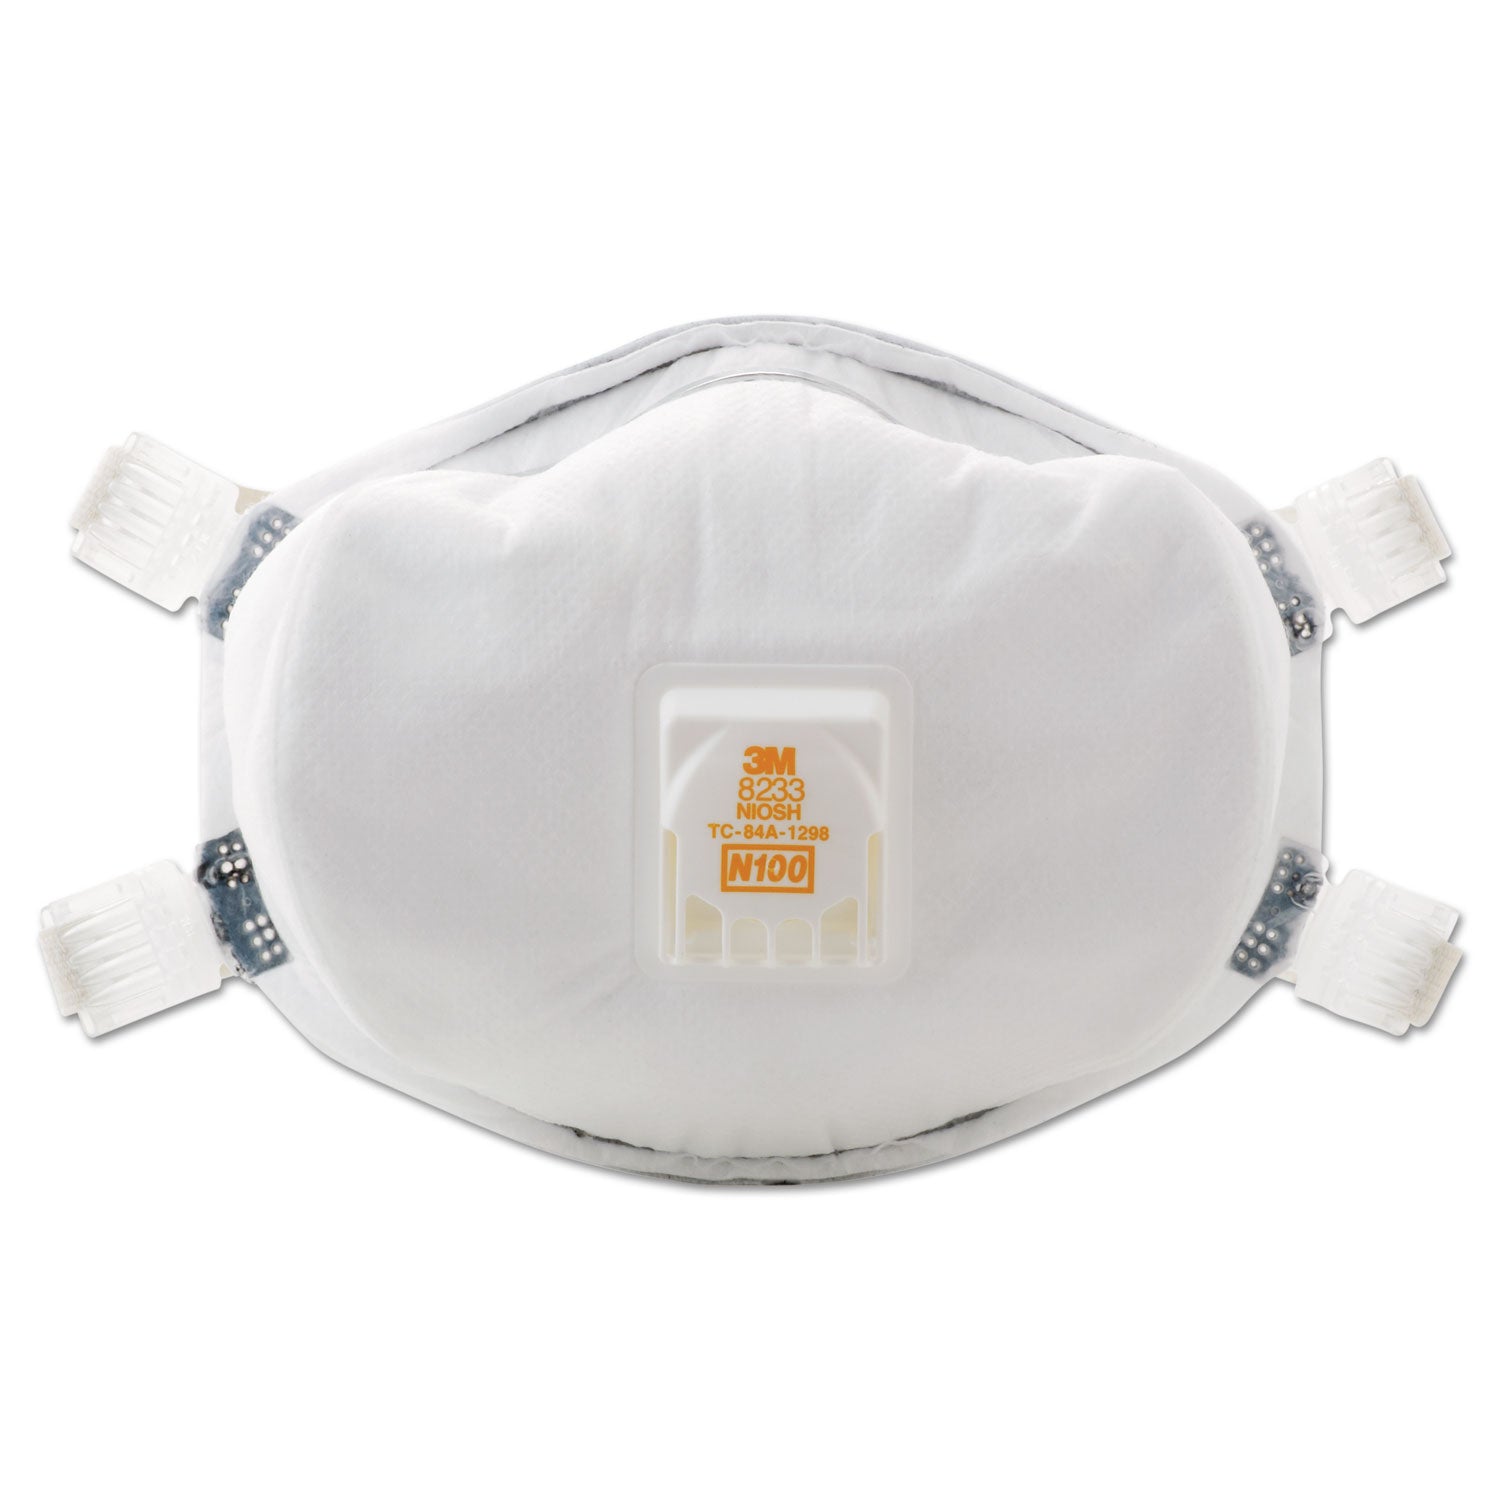 N100 Particulate Respirator, Standard Size - 